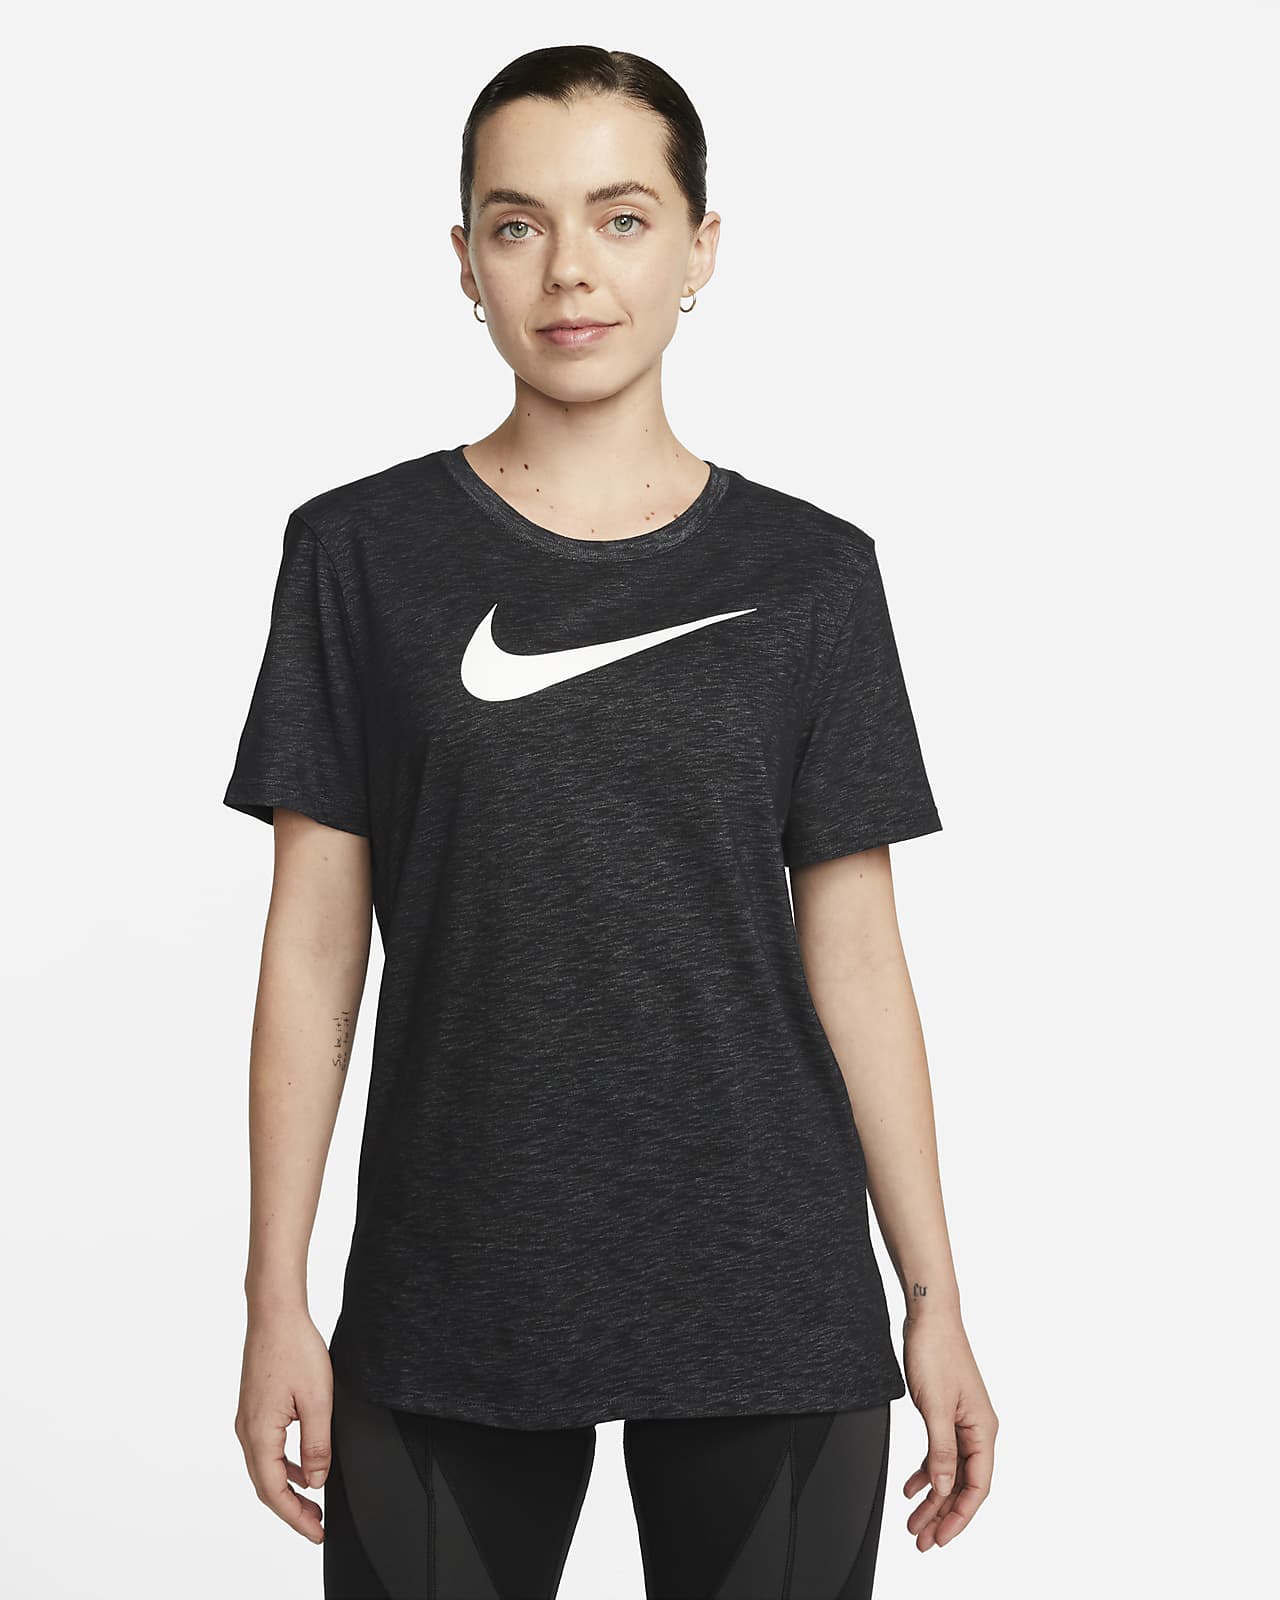 Womens Medium Active Nike Shirt Black Dri Fit Workout Top